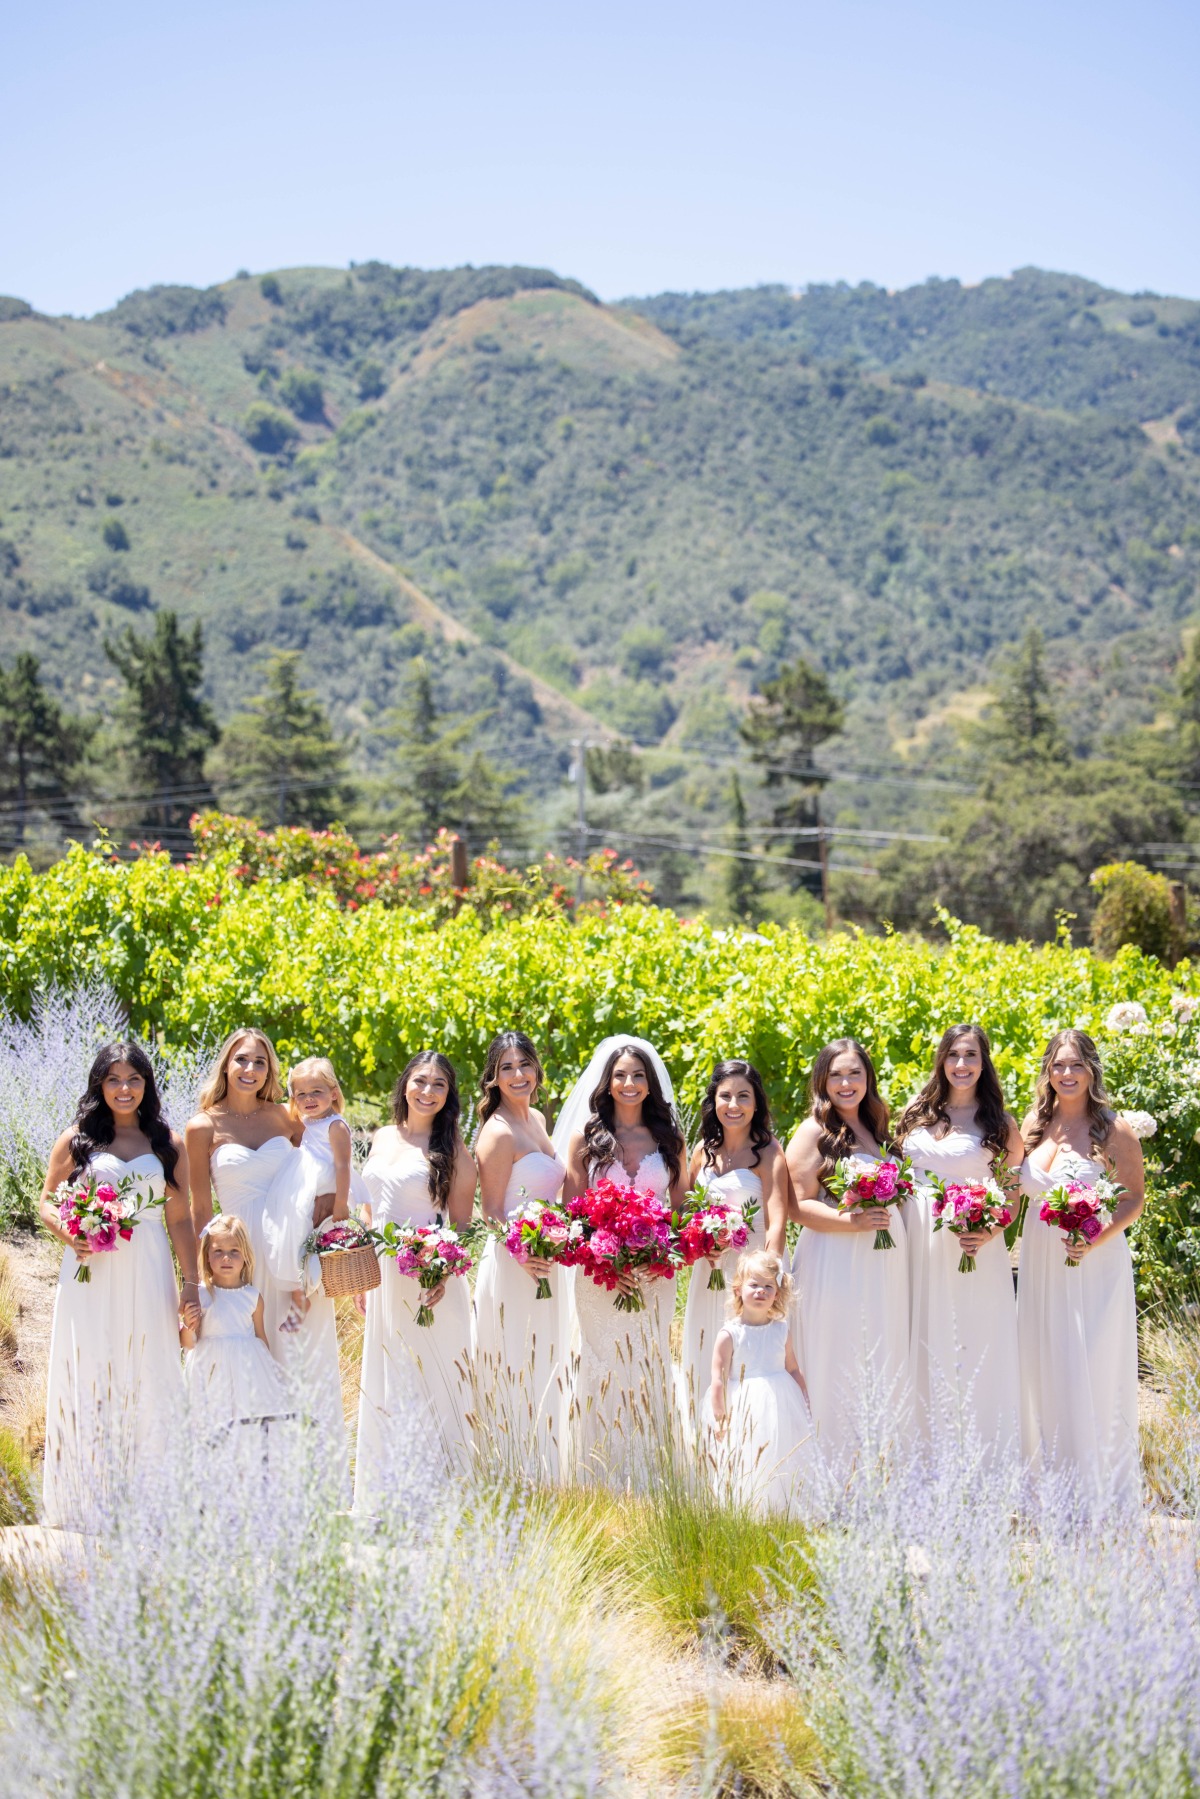 All white bridesmaids dresses